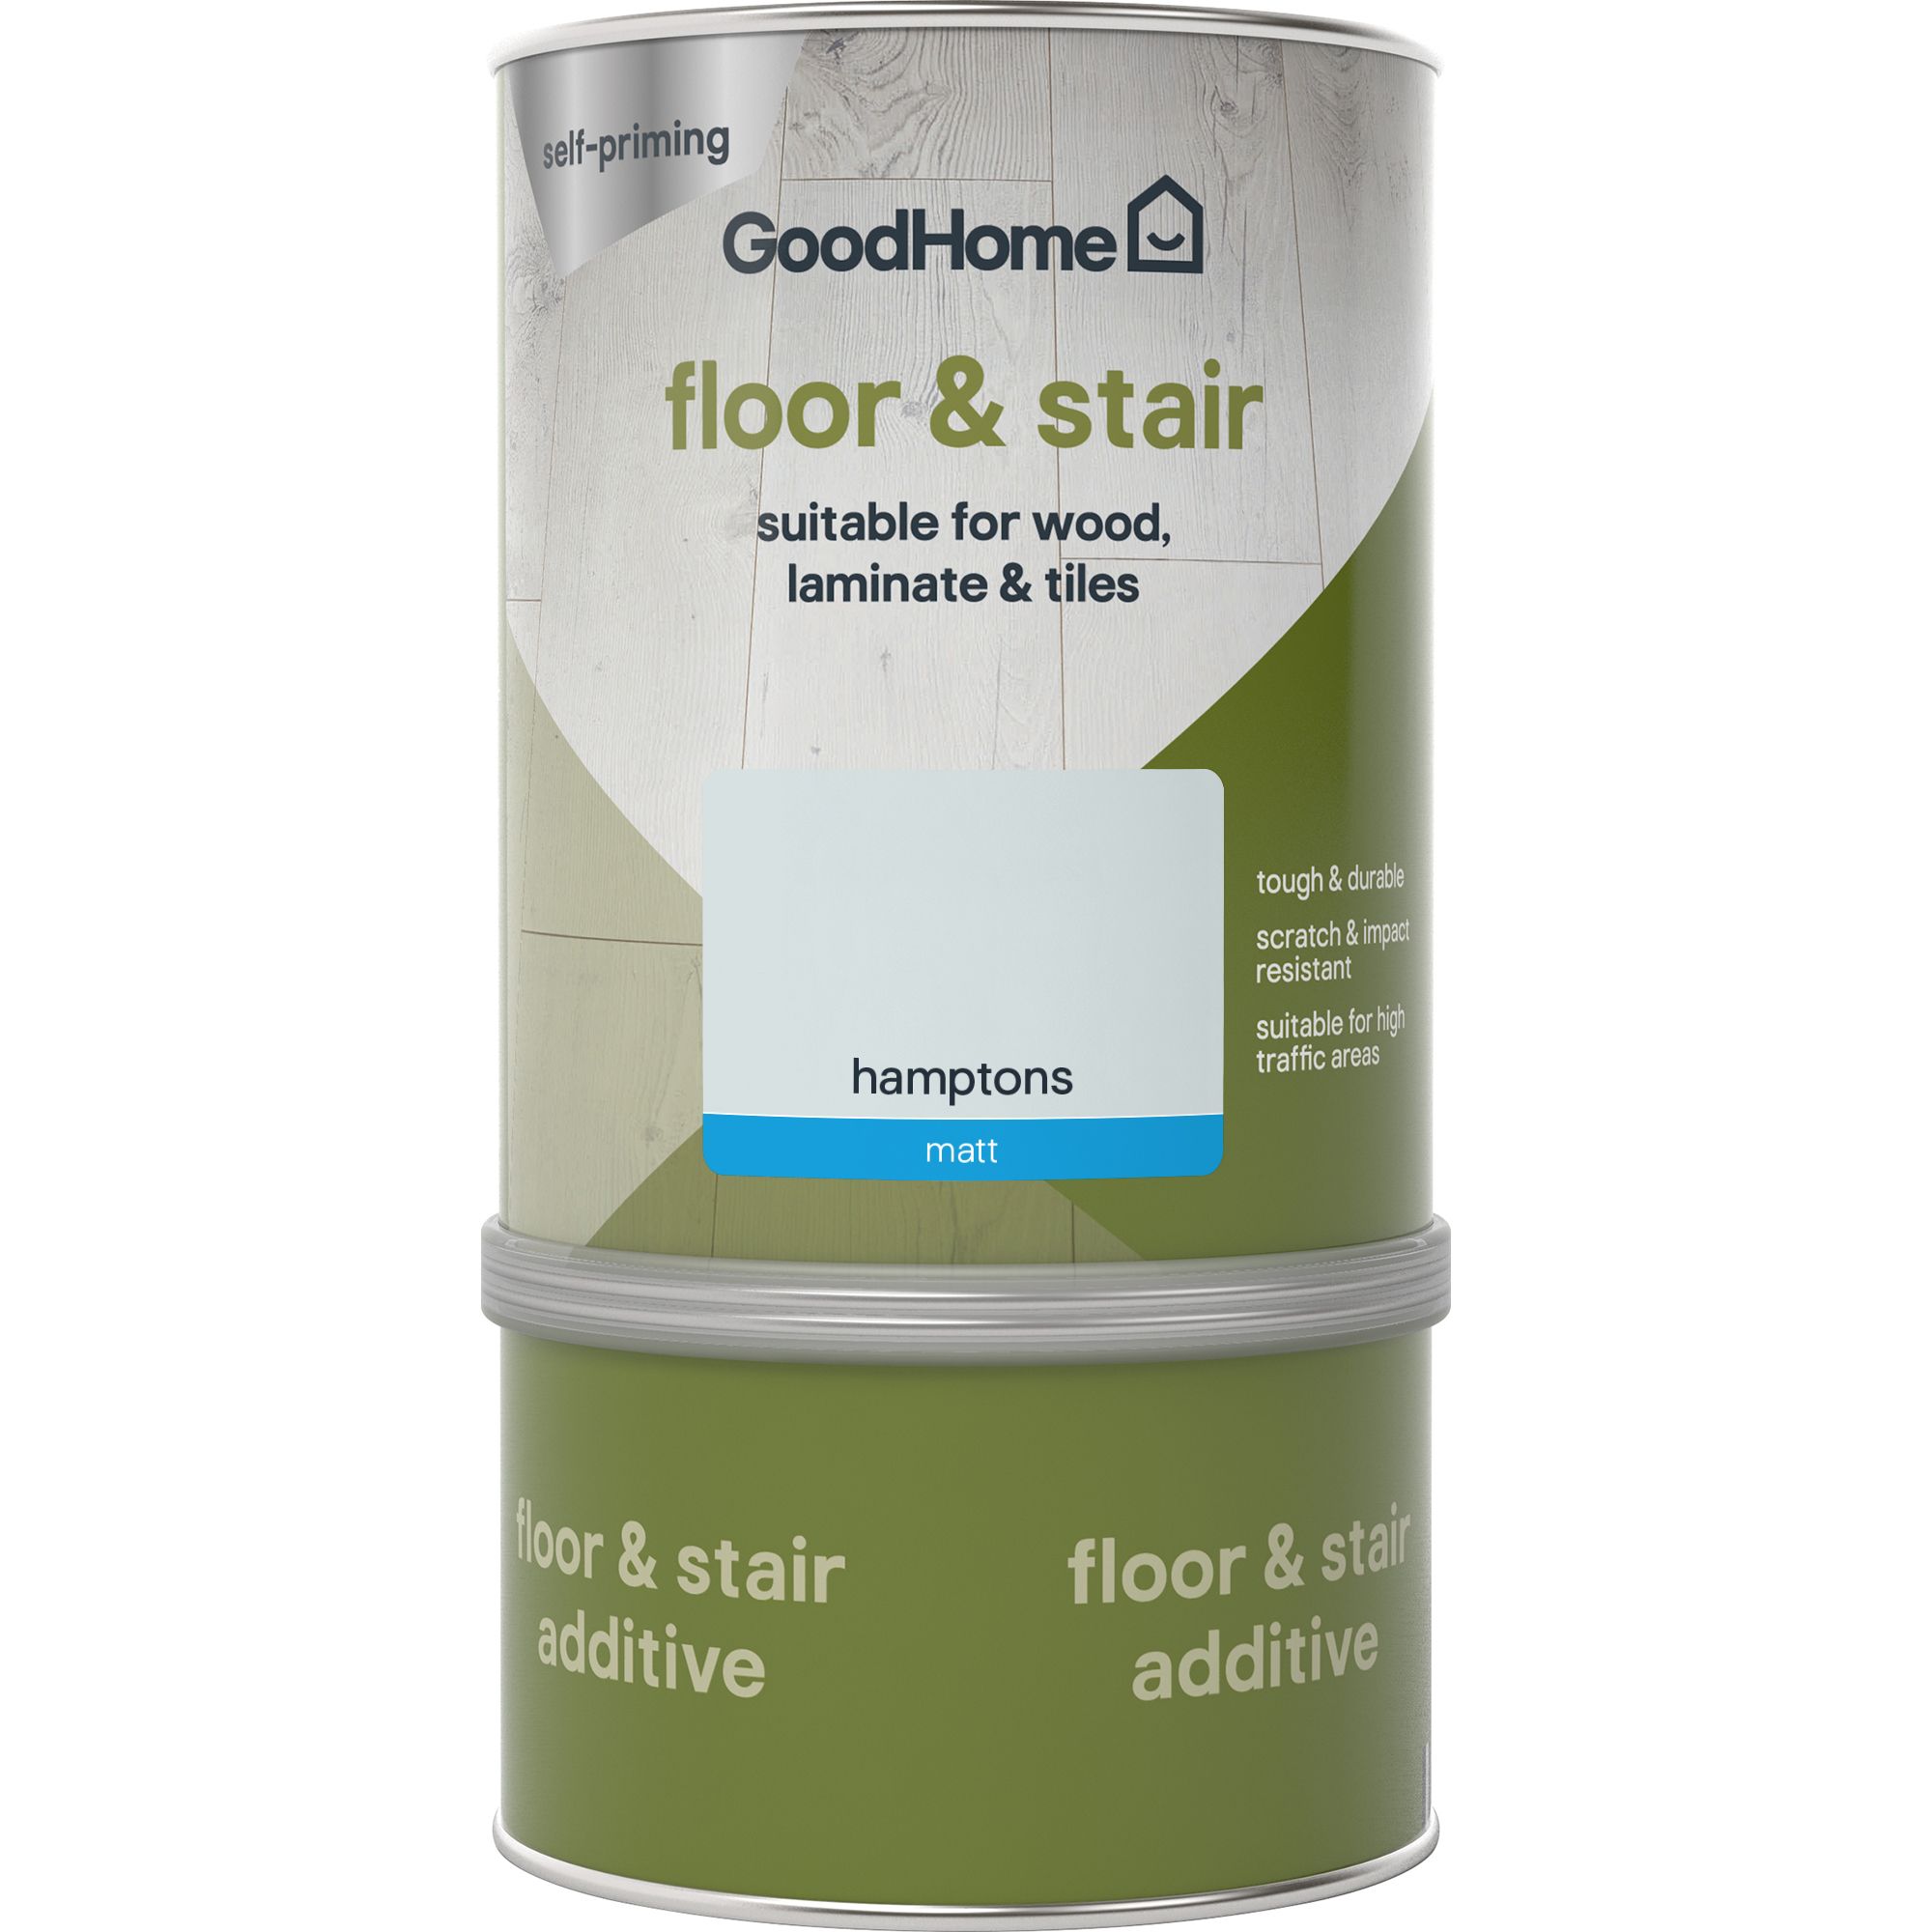 GoodHome Renovation Hamptons Matt Floor & stair paint, 750ml